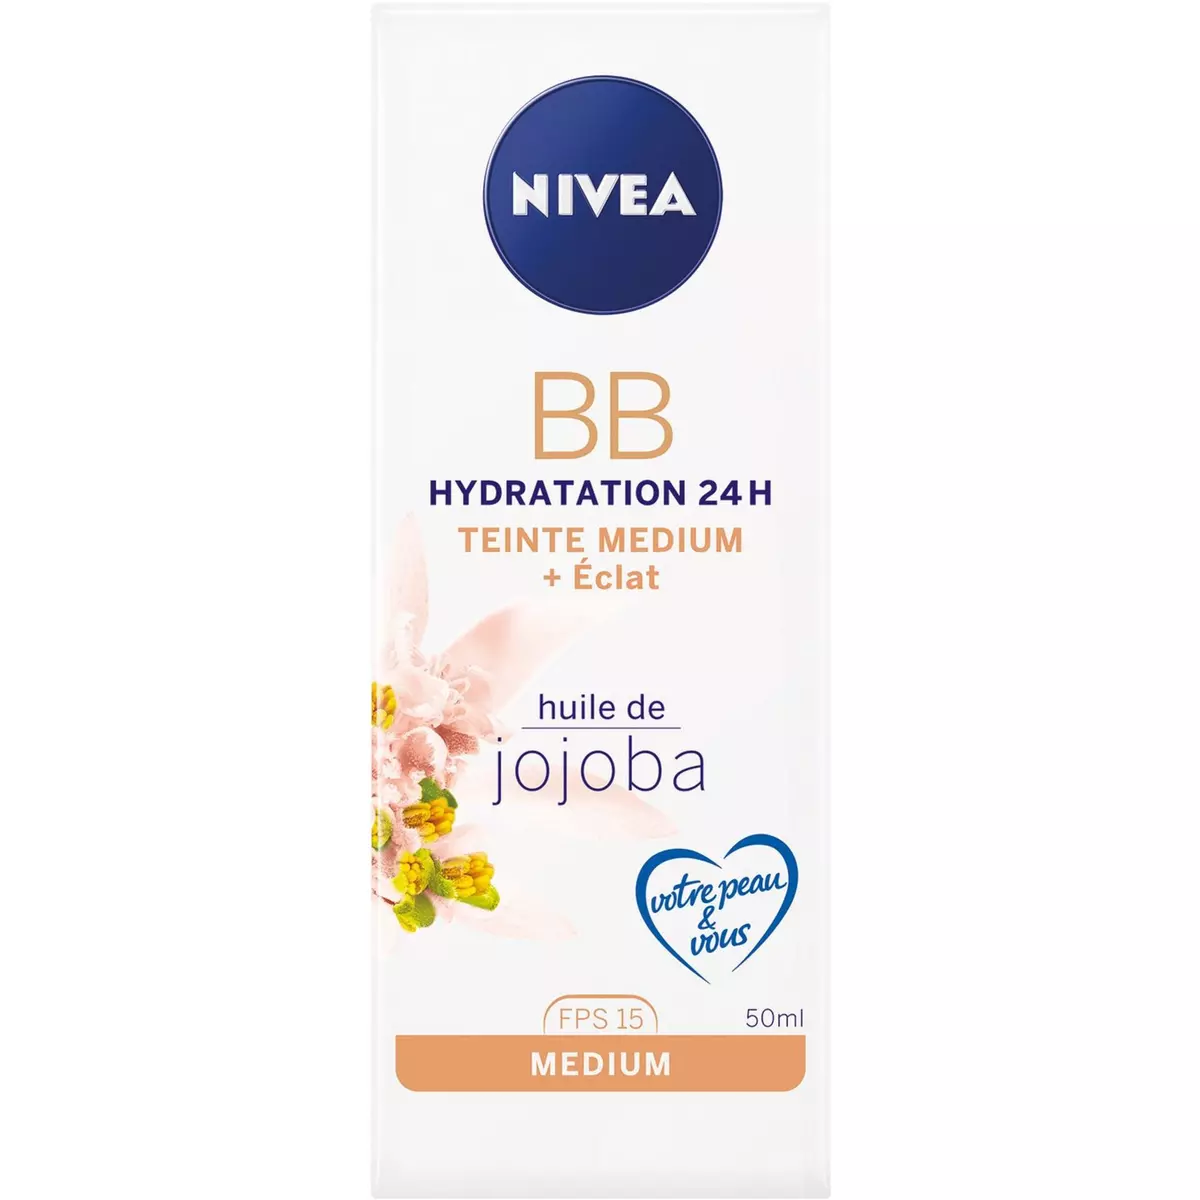 NIVEA BB crème hydratation 24h huile de jojoba teinte medium 50ml